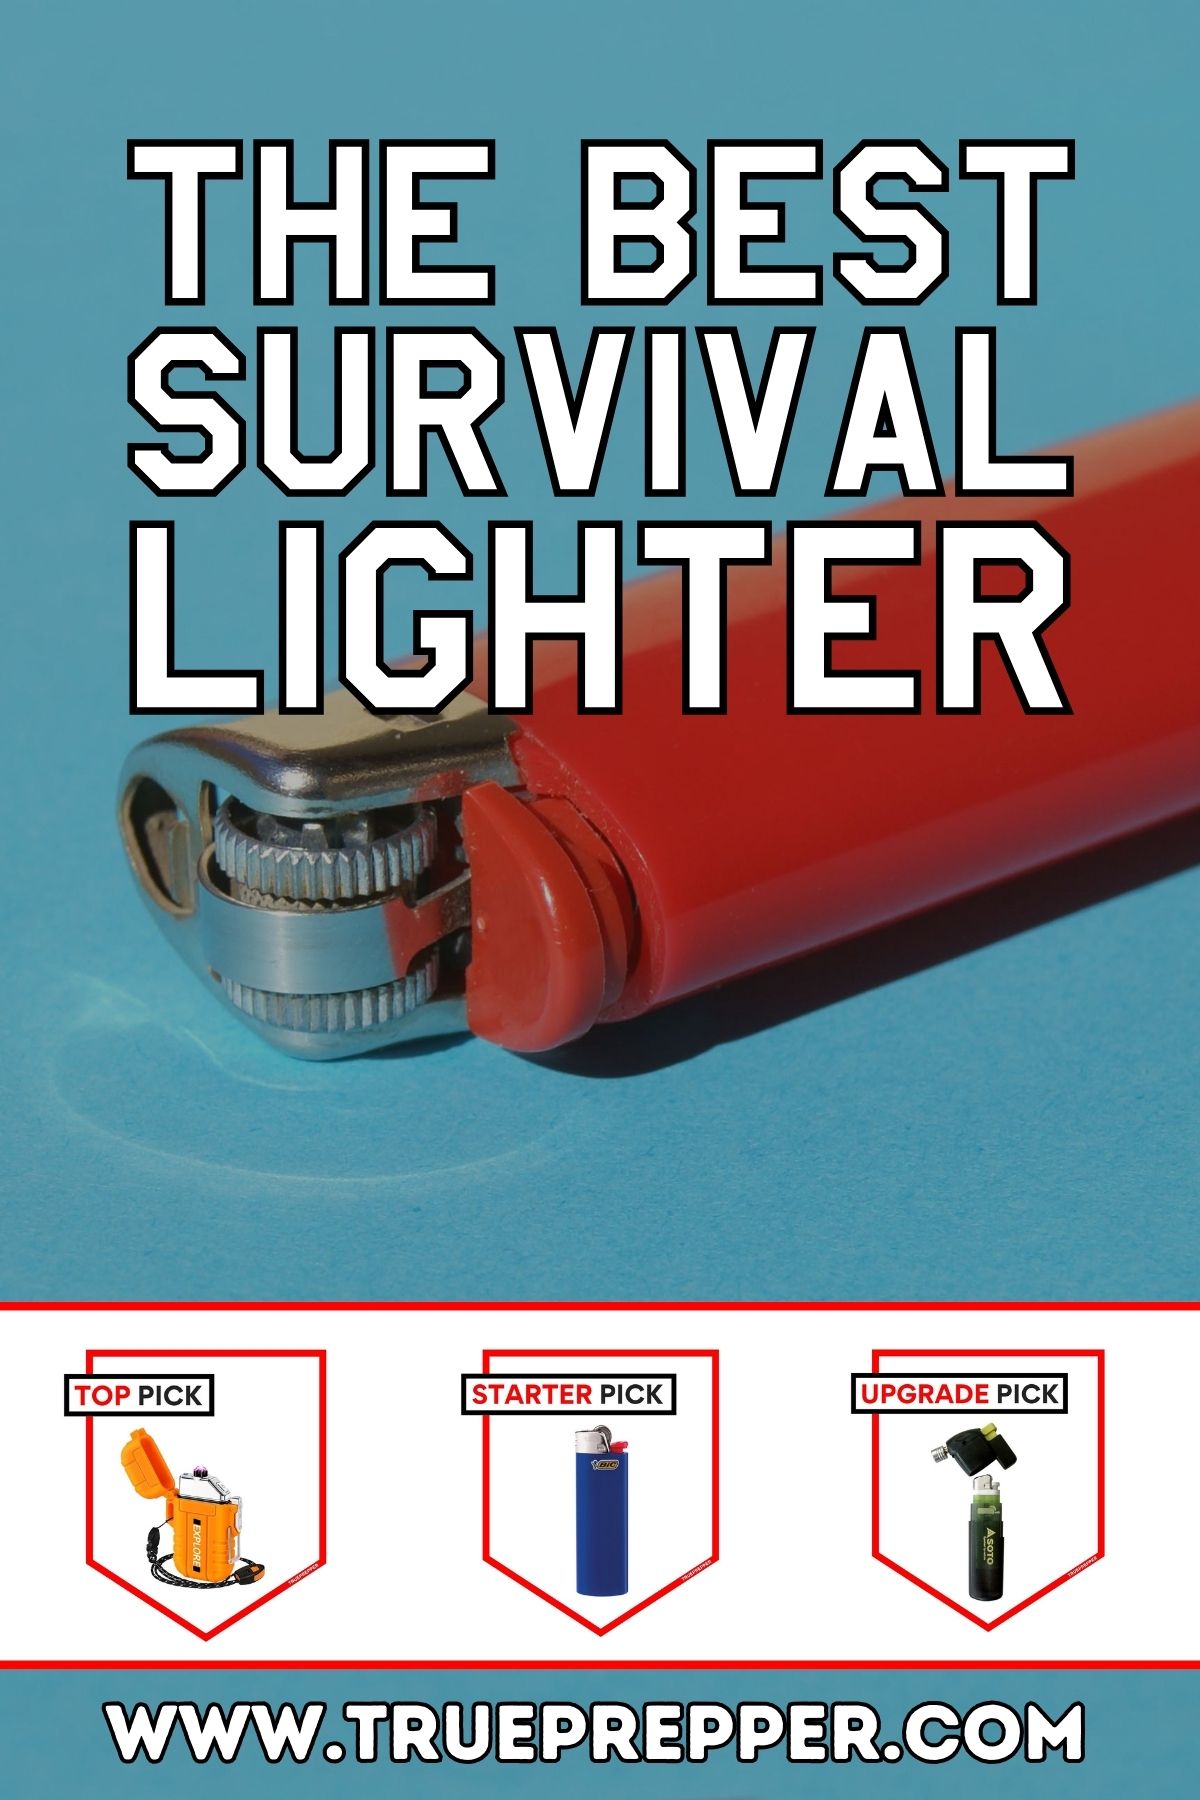 The Best Survival Lighter